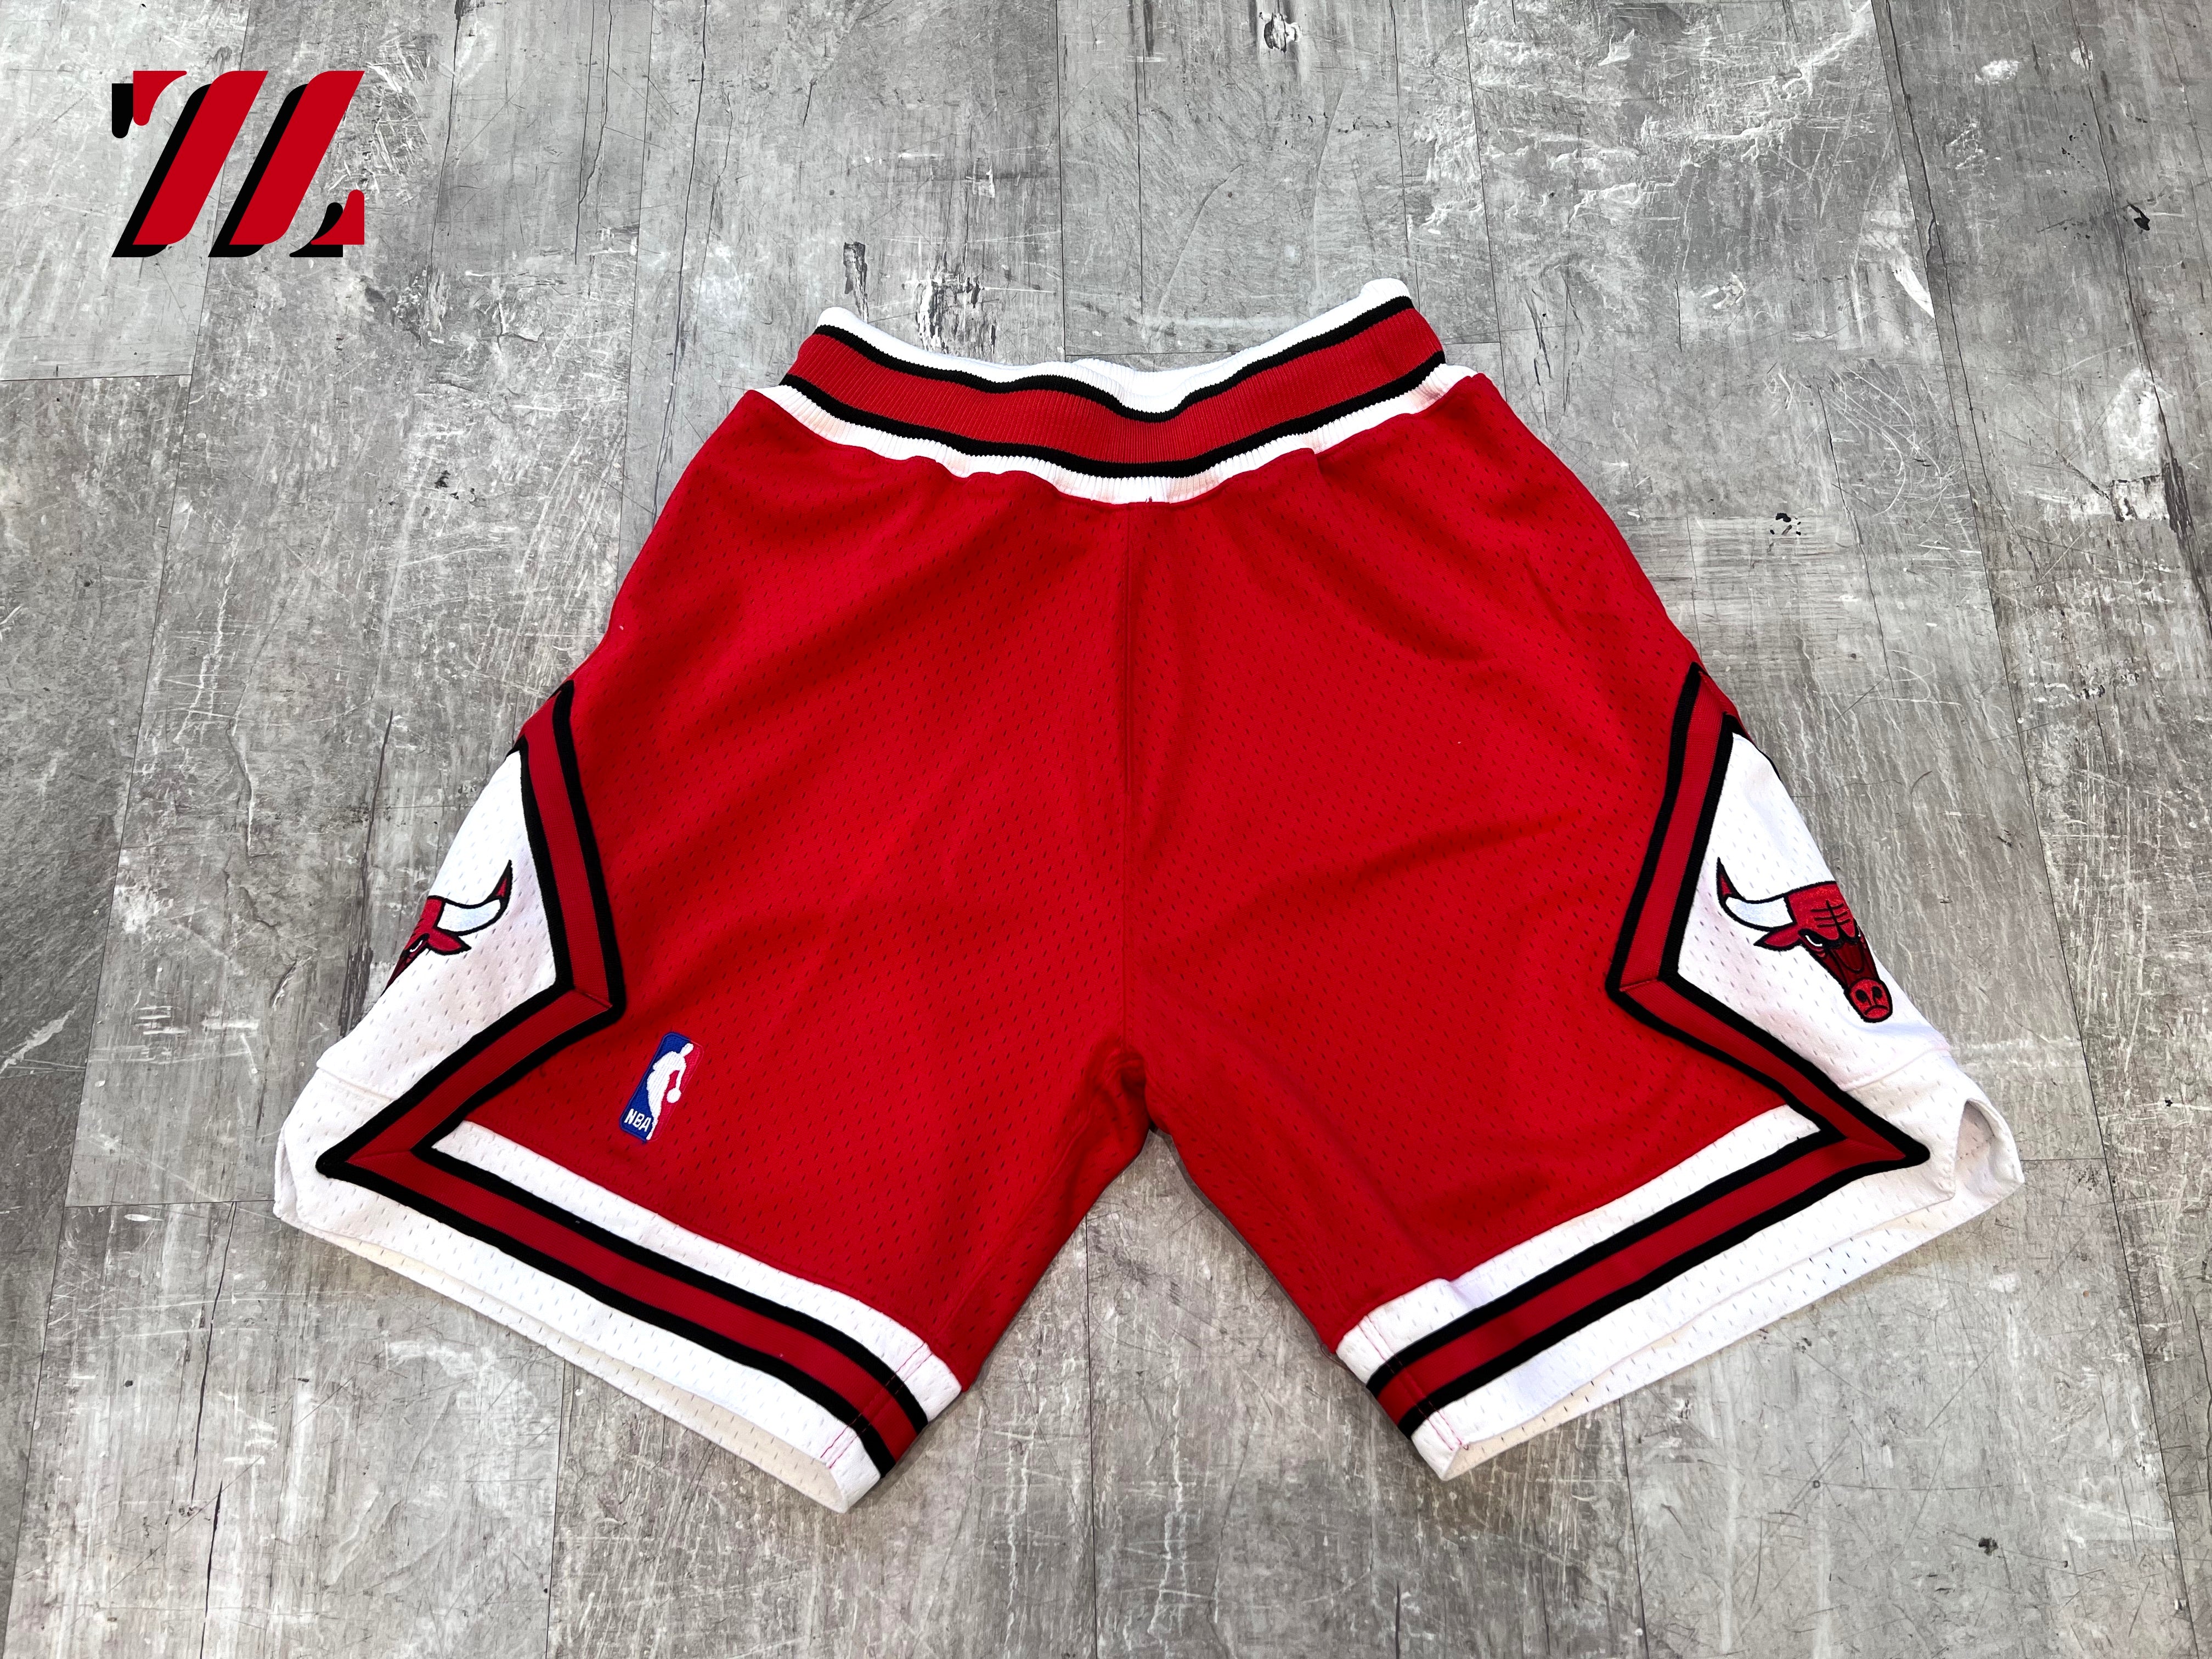 MITCHELL & NESS Chicago Bulls Authentic Shorts Red - Stadium Goods